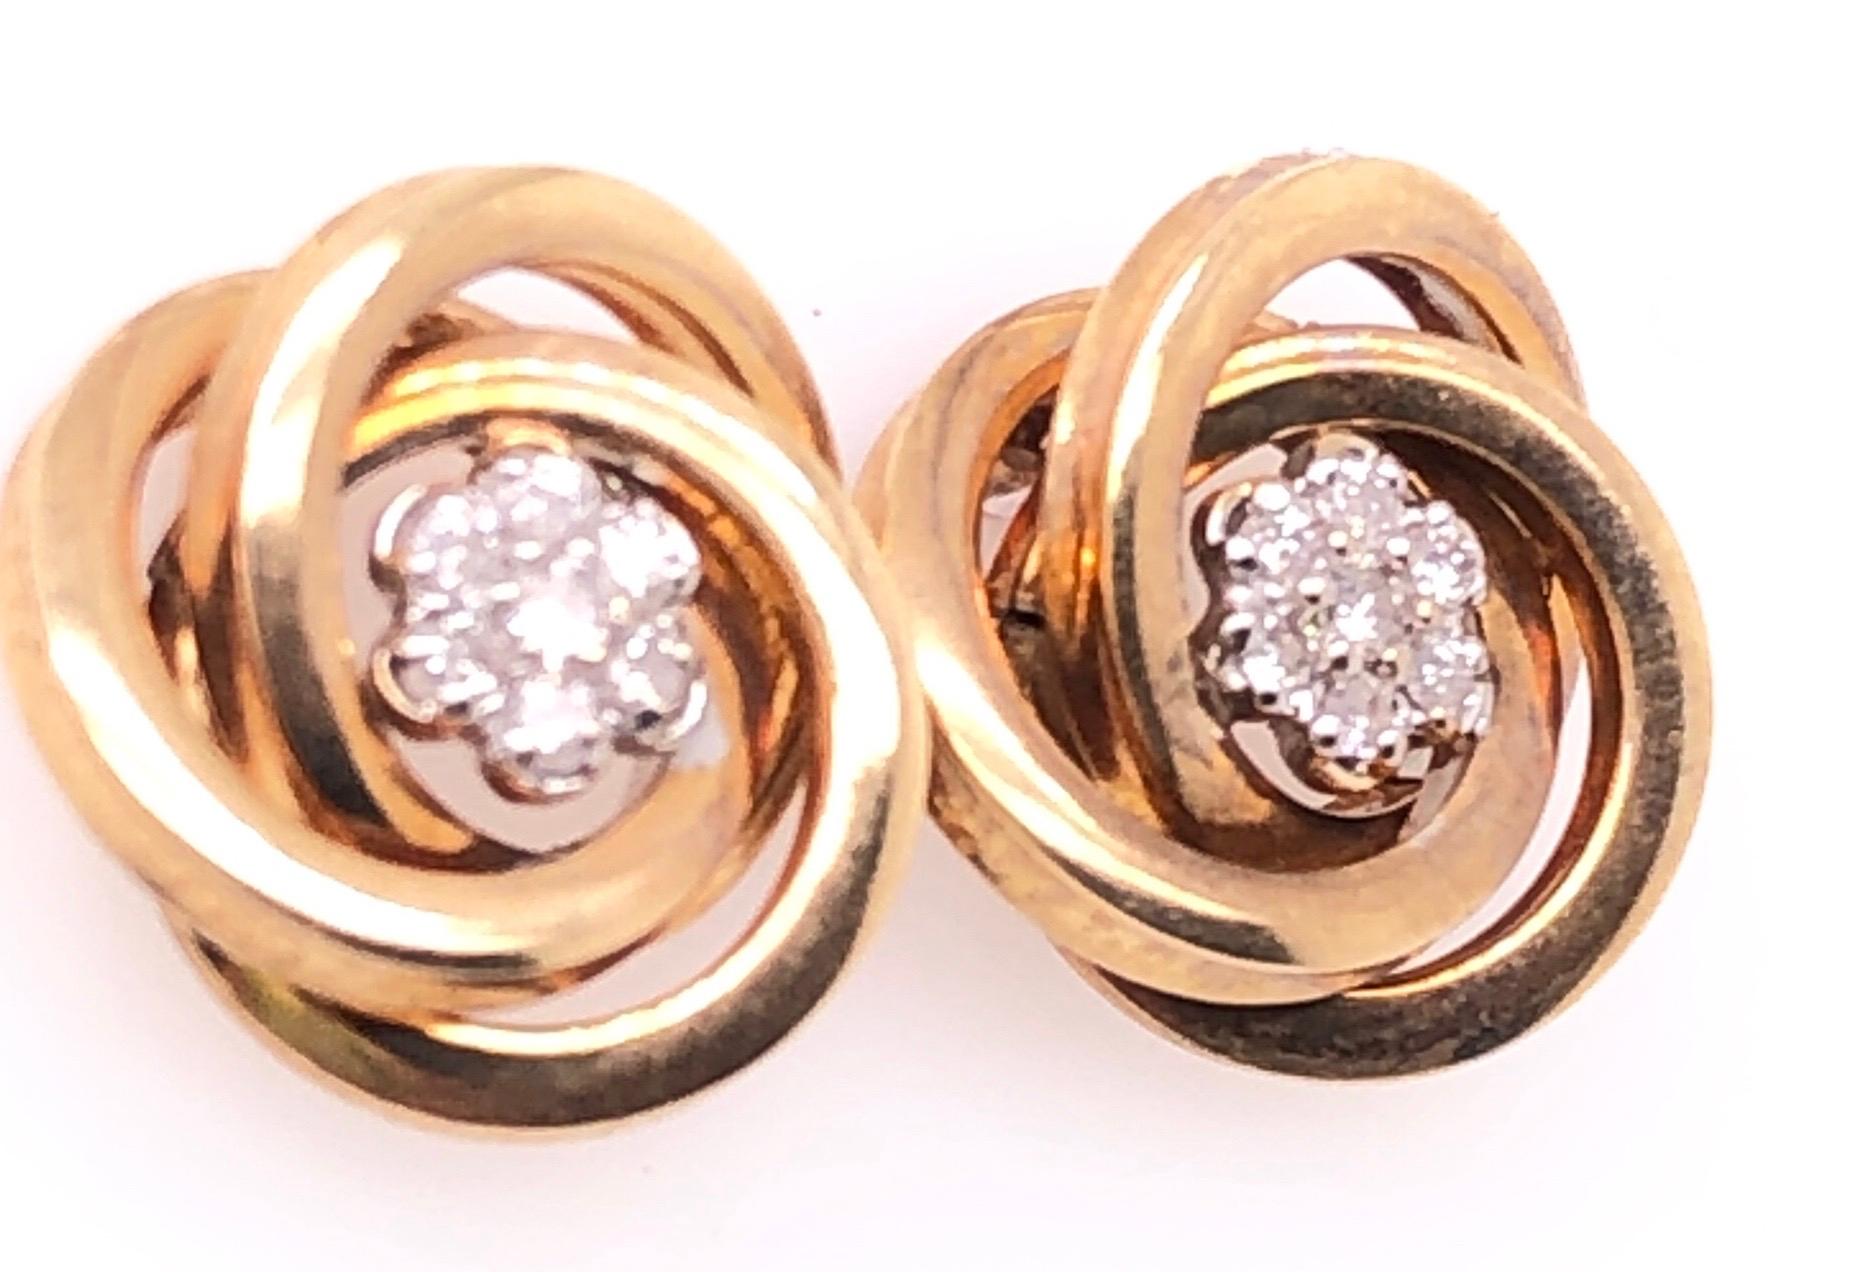 14 Karat Yellow Gold Huggie Earrings with Round Diamonds 0.40 TDW.
2.77 grams total weight.